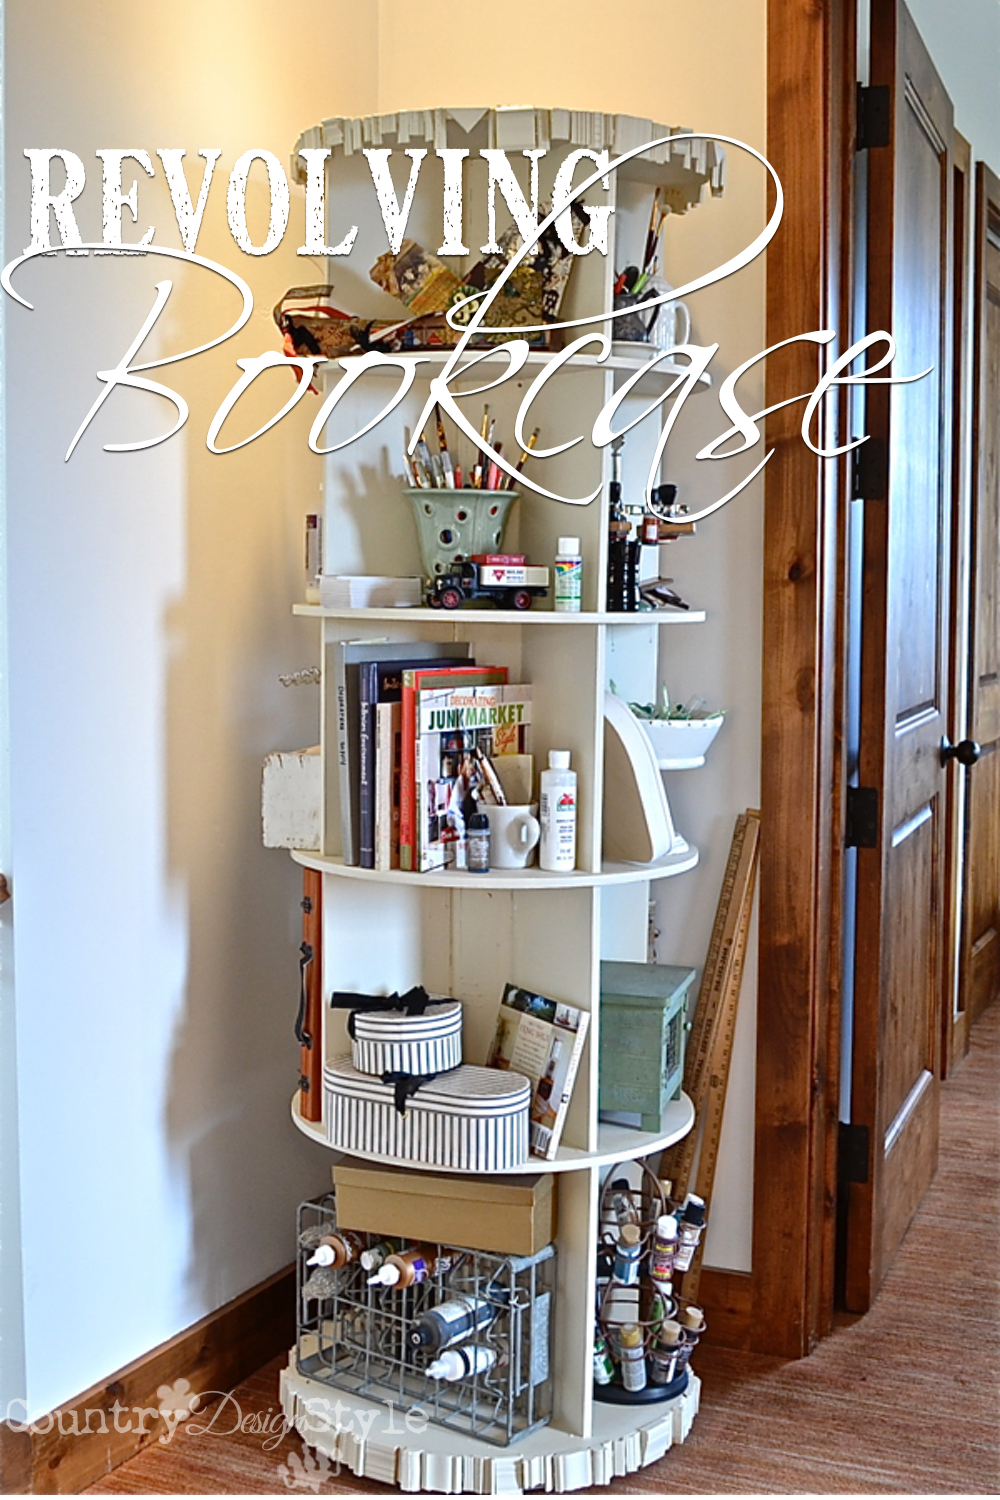 revolving bookcase revolving-bookcase-country-design-style-pn TFKRKMY